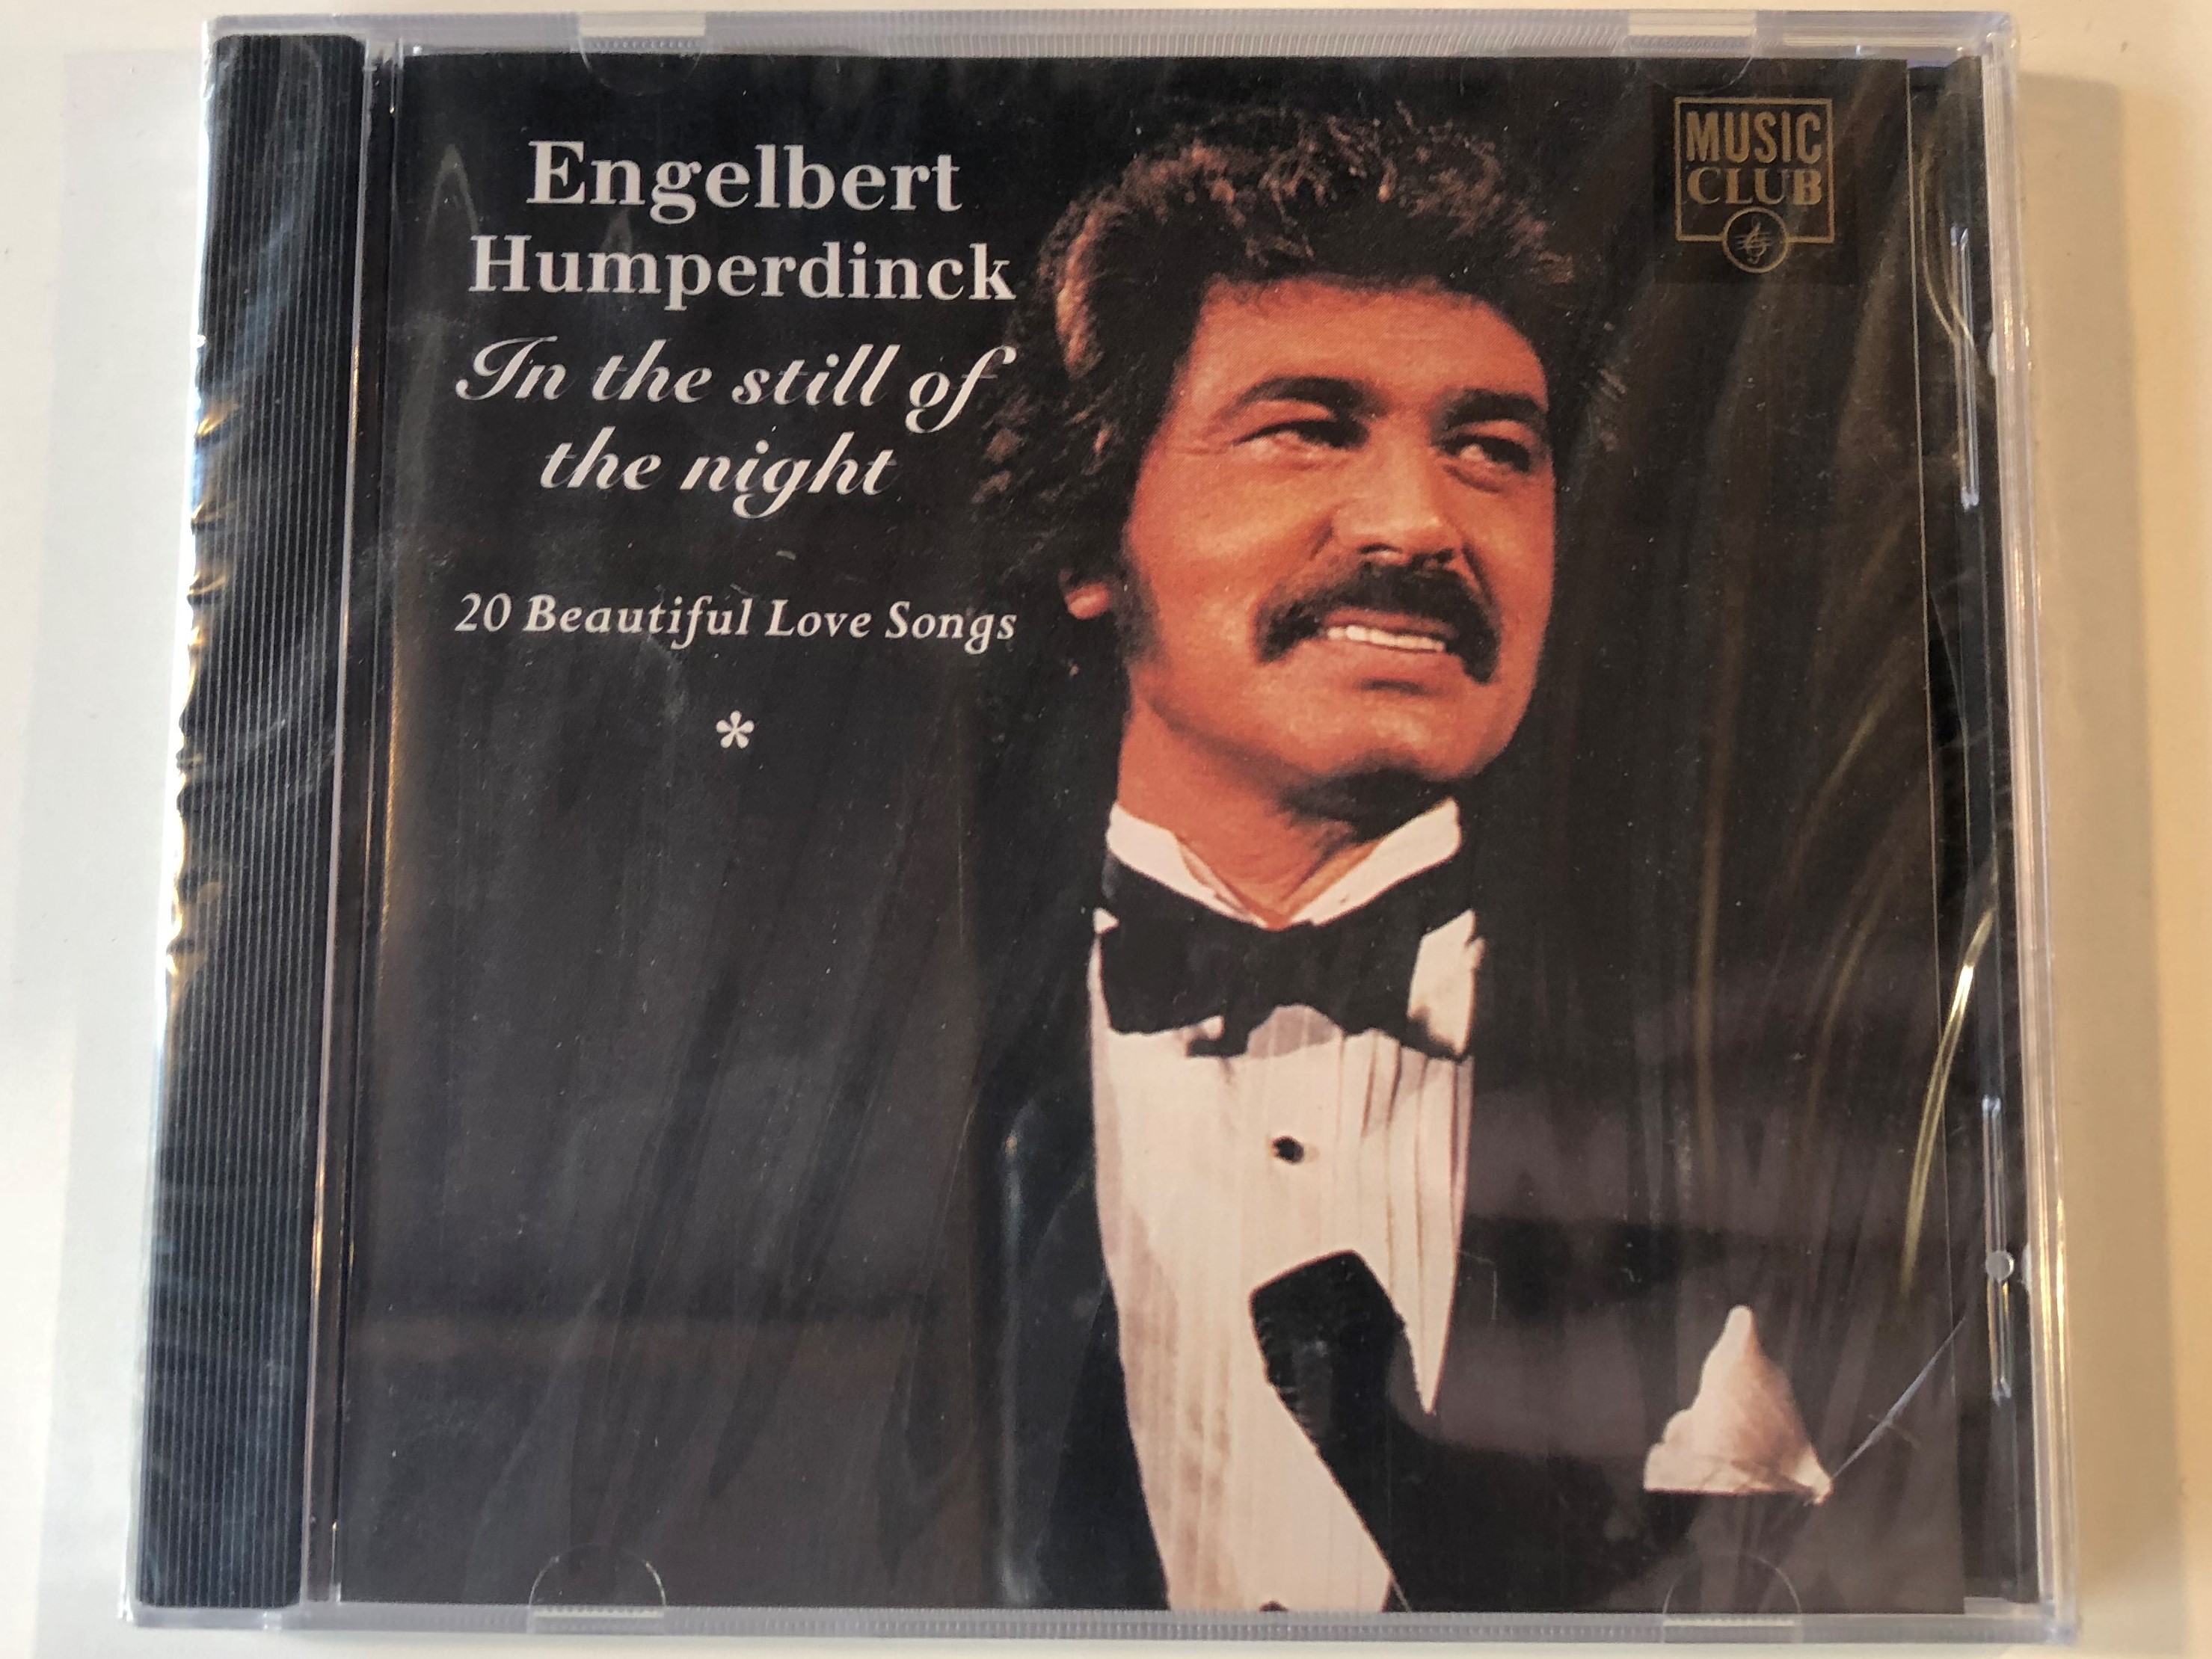 engelbert-humperdinck-in-the-still-of-the-night-20-beautiful-love-songs-music-club-audio-cd-1992-mccd-055-1-.jpg